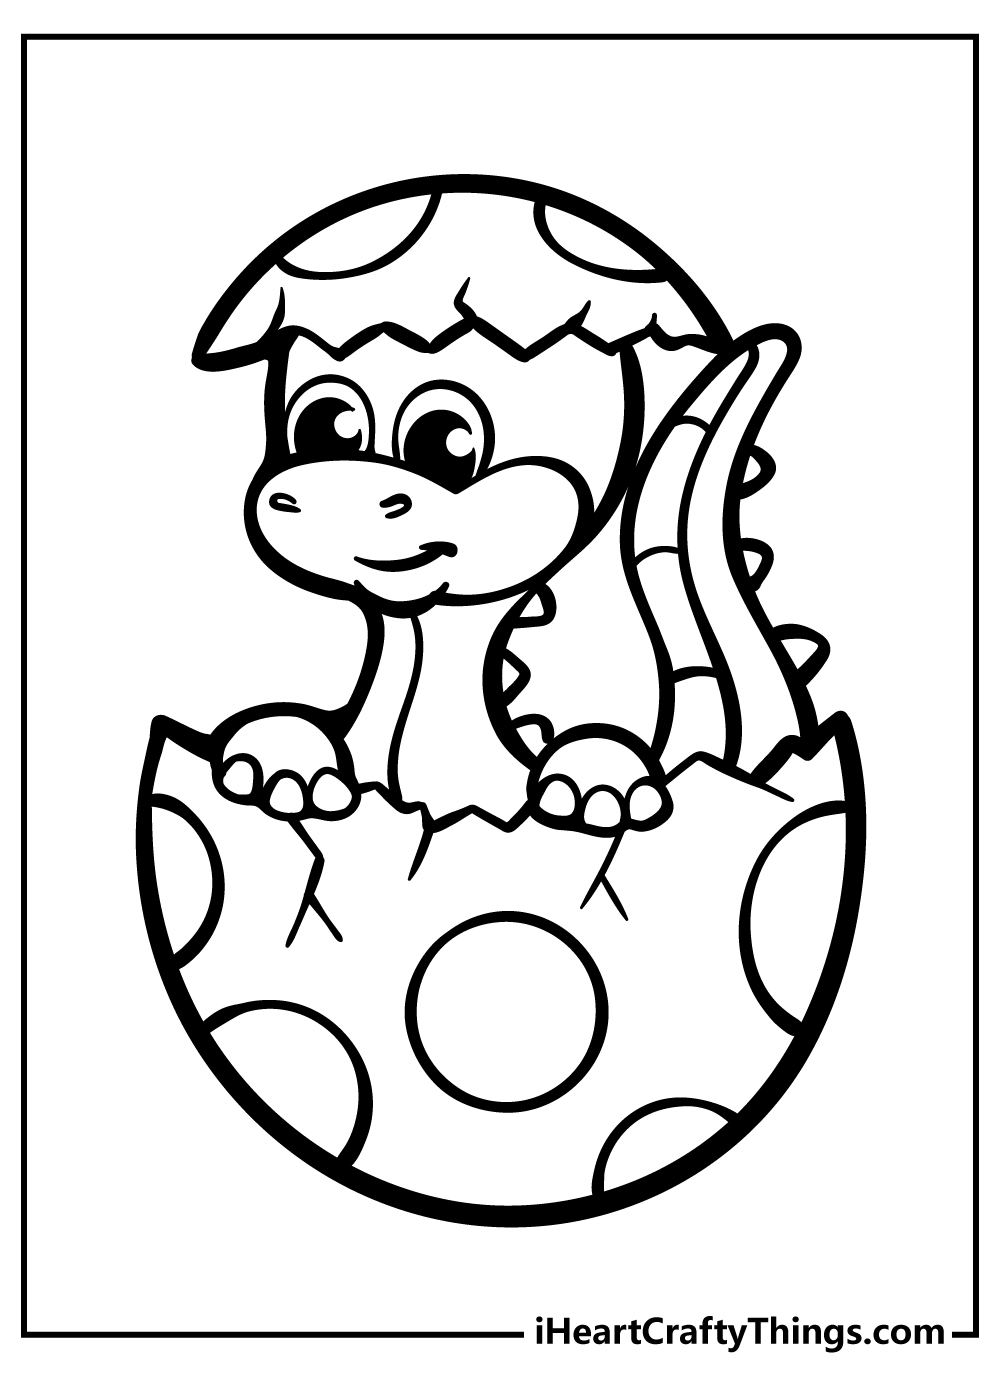 Baby Dinosaur Coloring Original Sheet for children free download